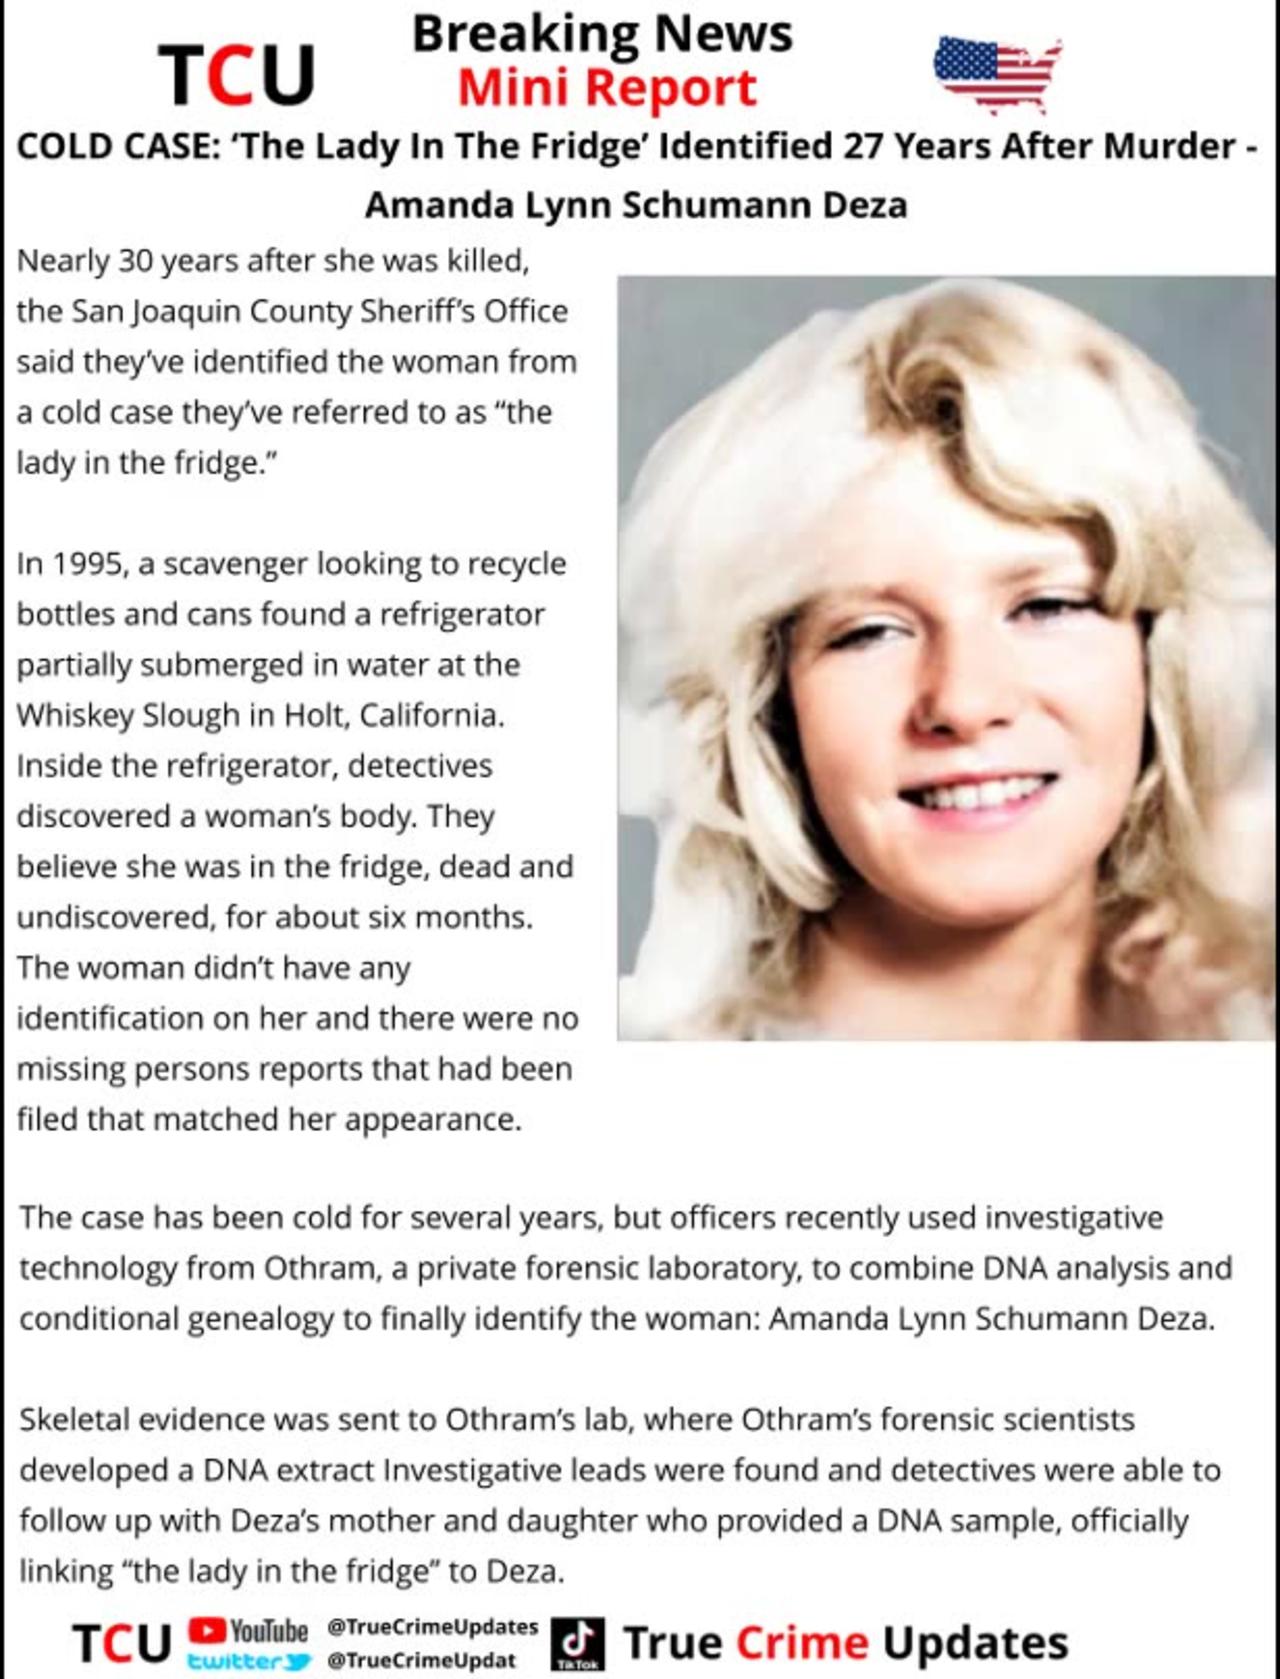 COLD CASE: ‘The Lady In The Fridge’ Identified 27 Years After Murder - Amanda Lynn Schumann Deza